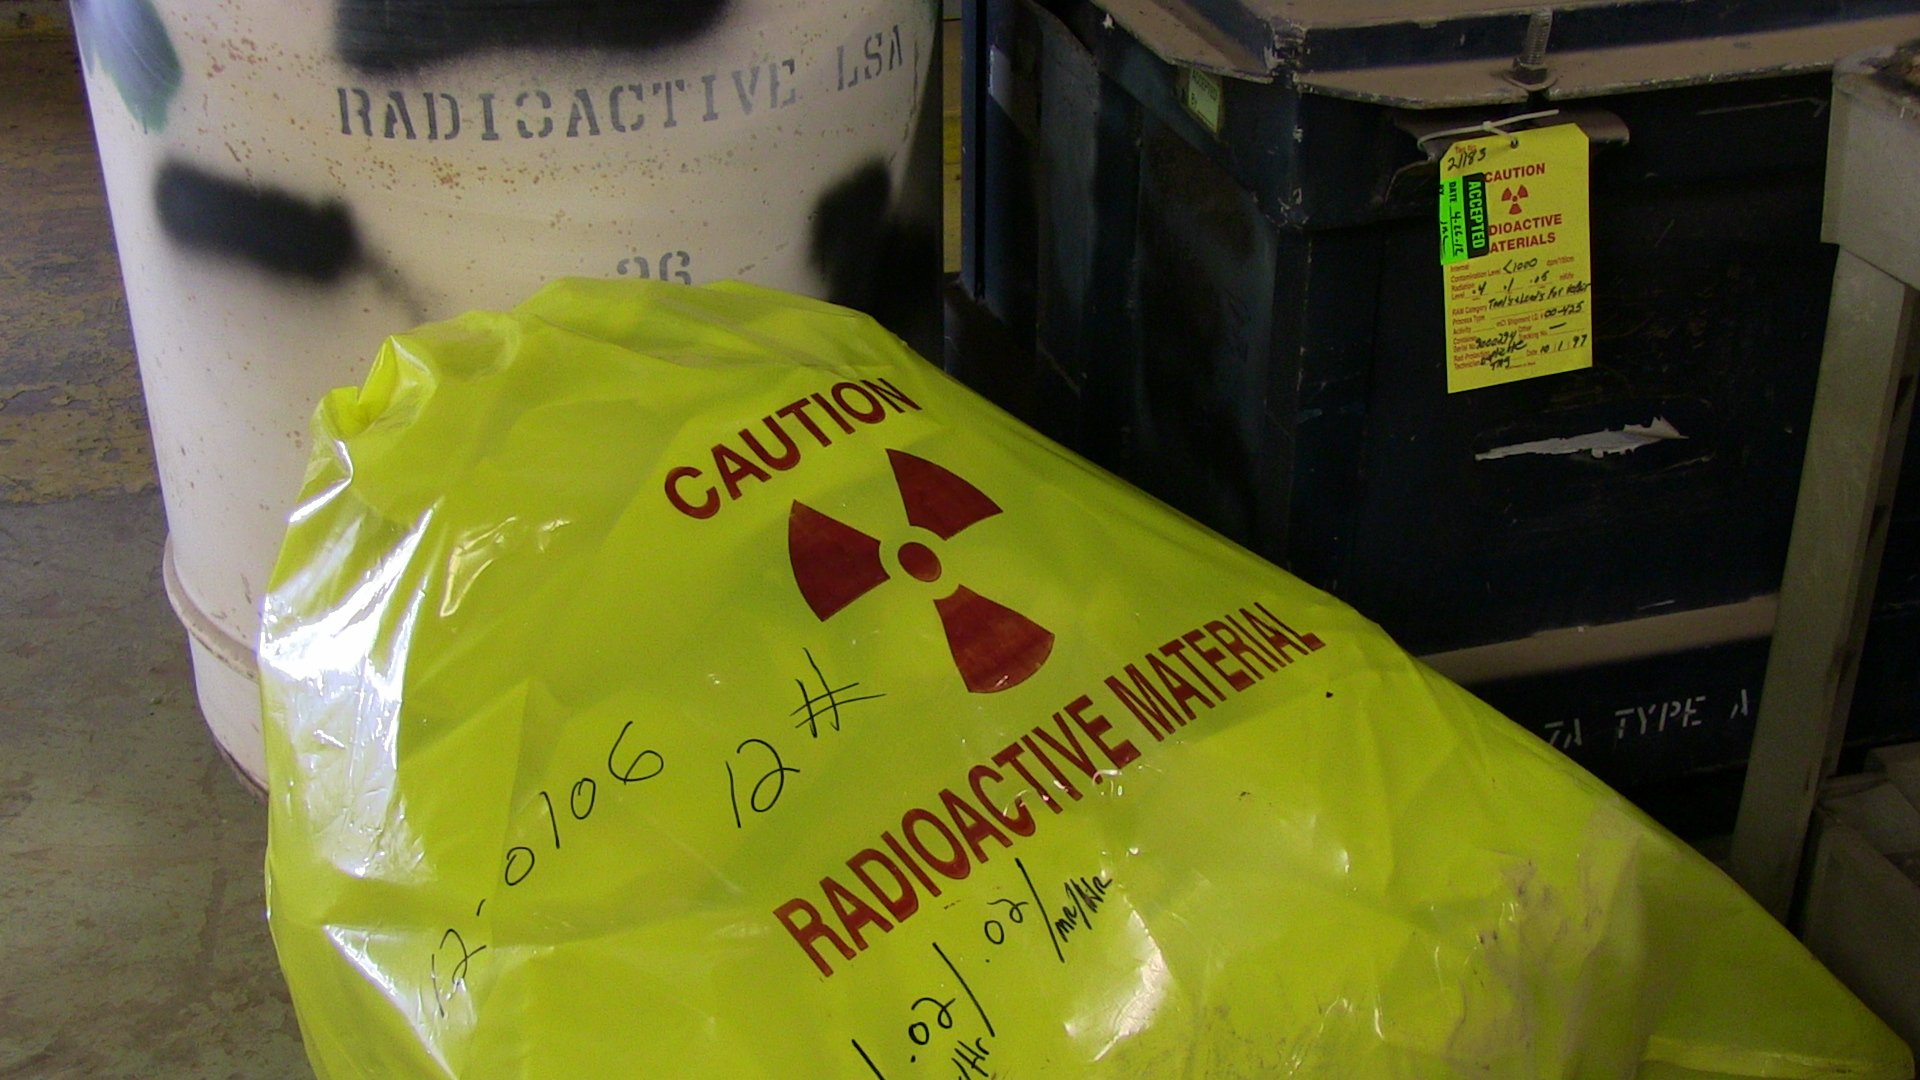 caution-radioactive-materials-bag